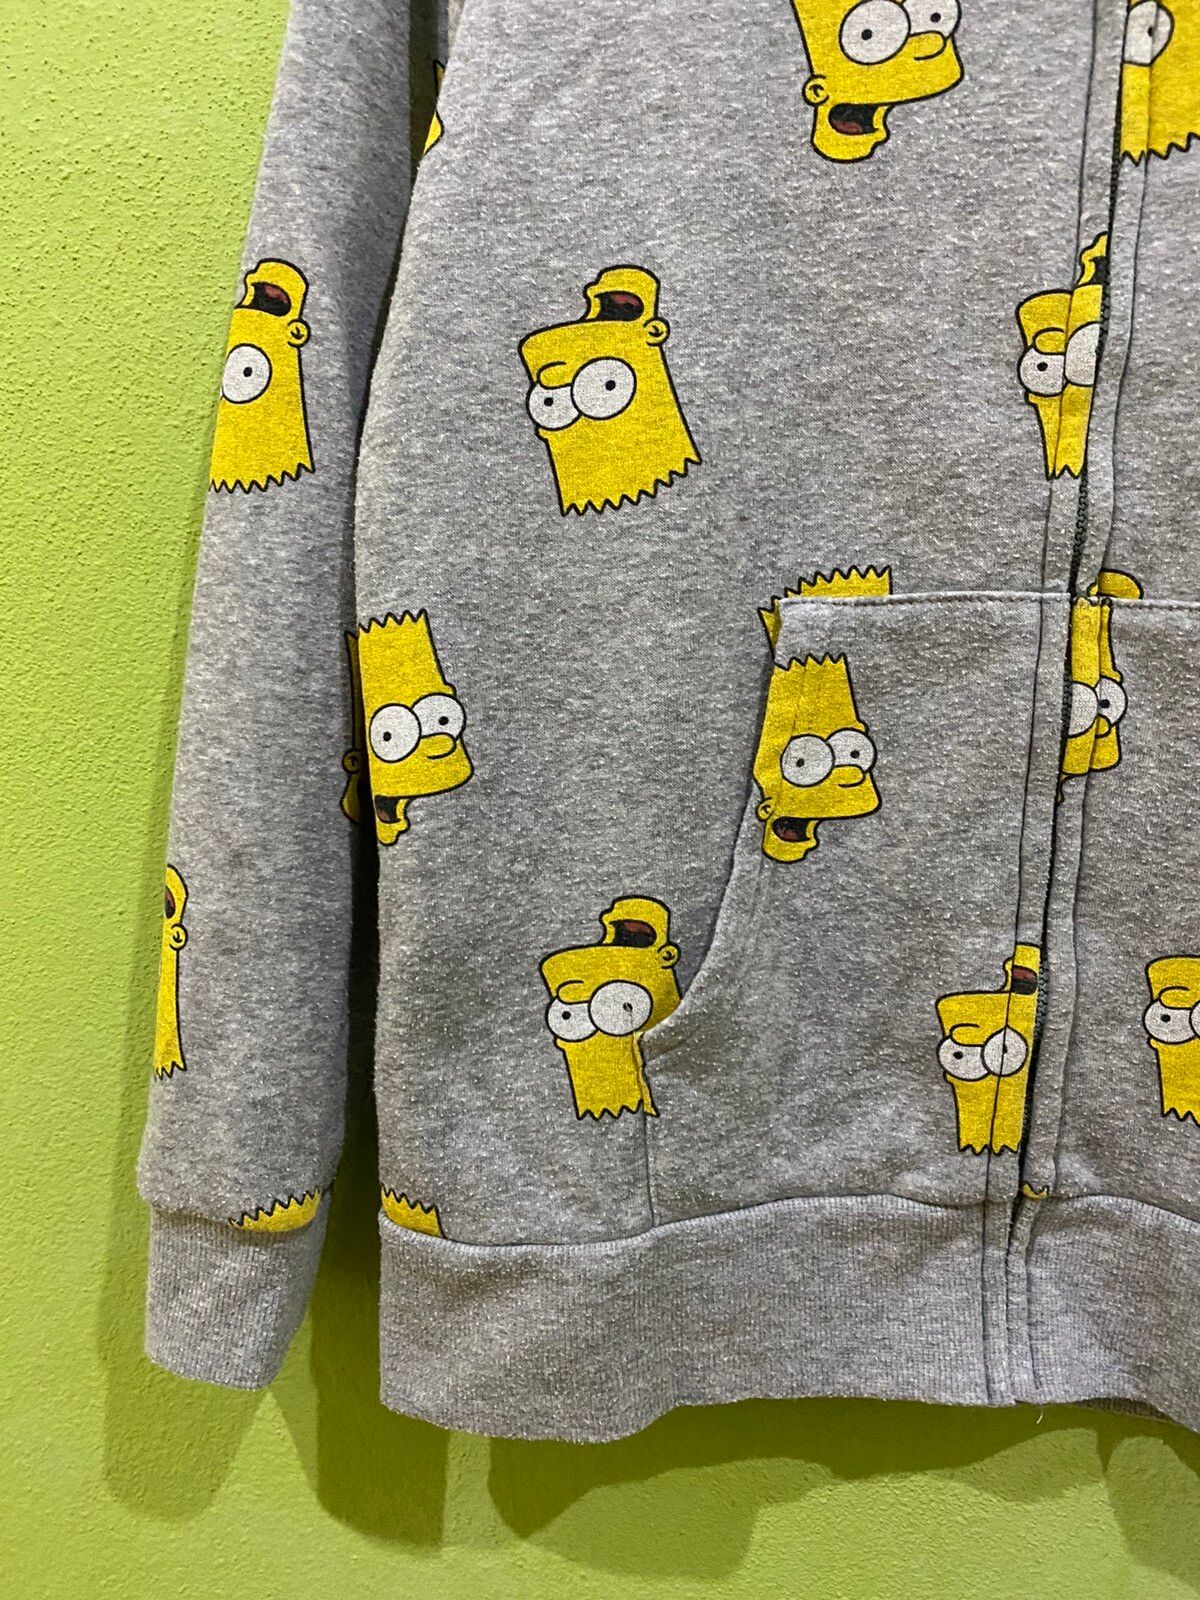 The Simpsons The Simpsons Full Print Hoddies Sweater Size US M / EU 48-50 / 2 - 4 Thumbnail